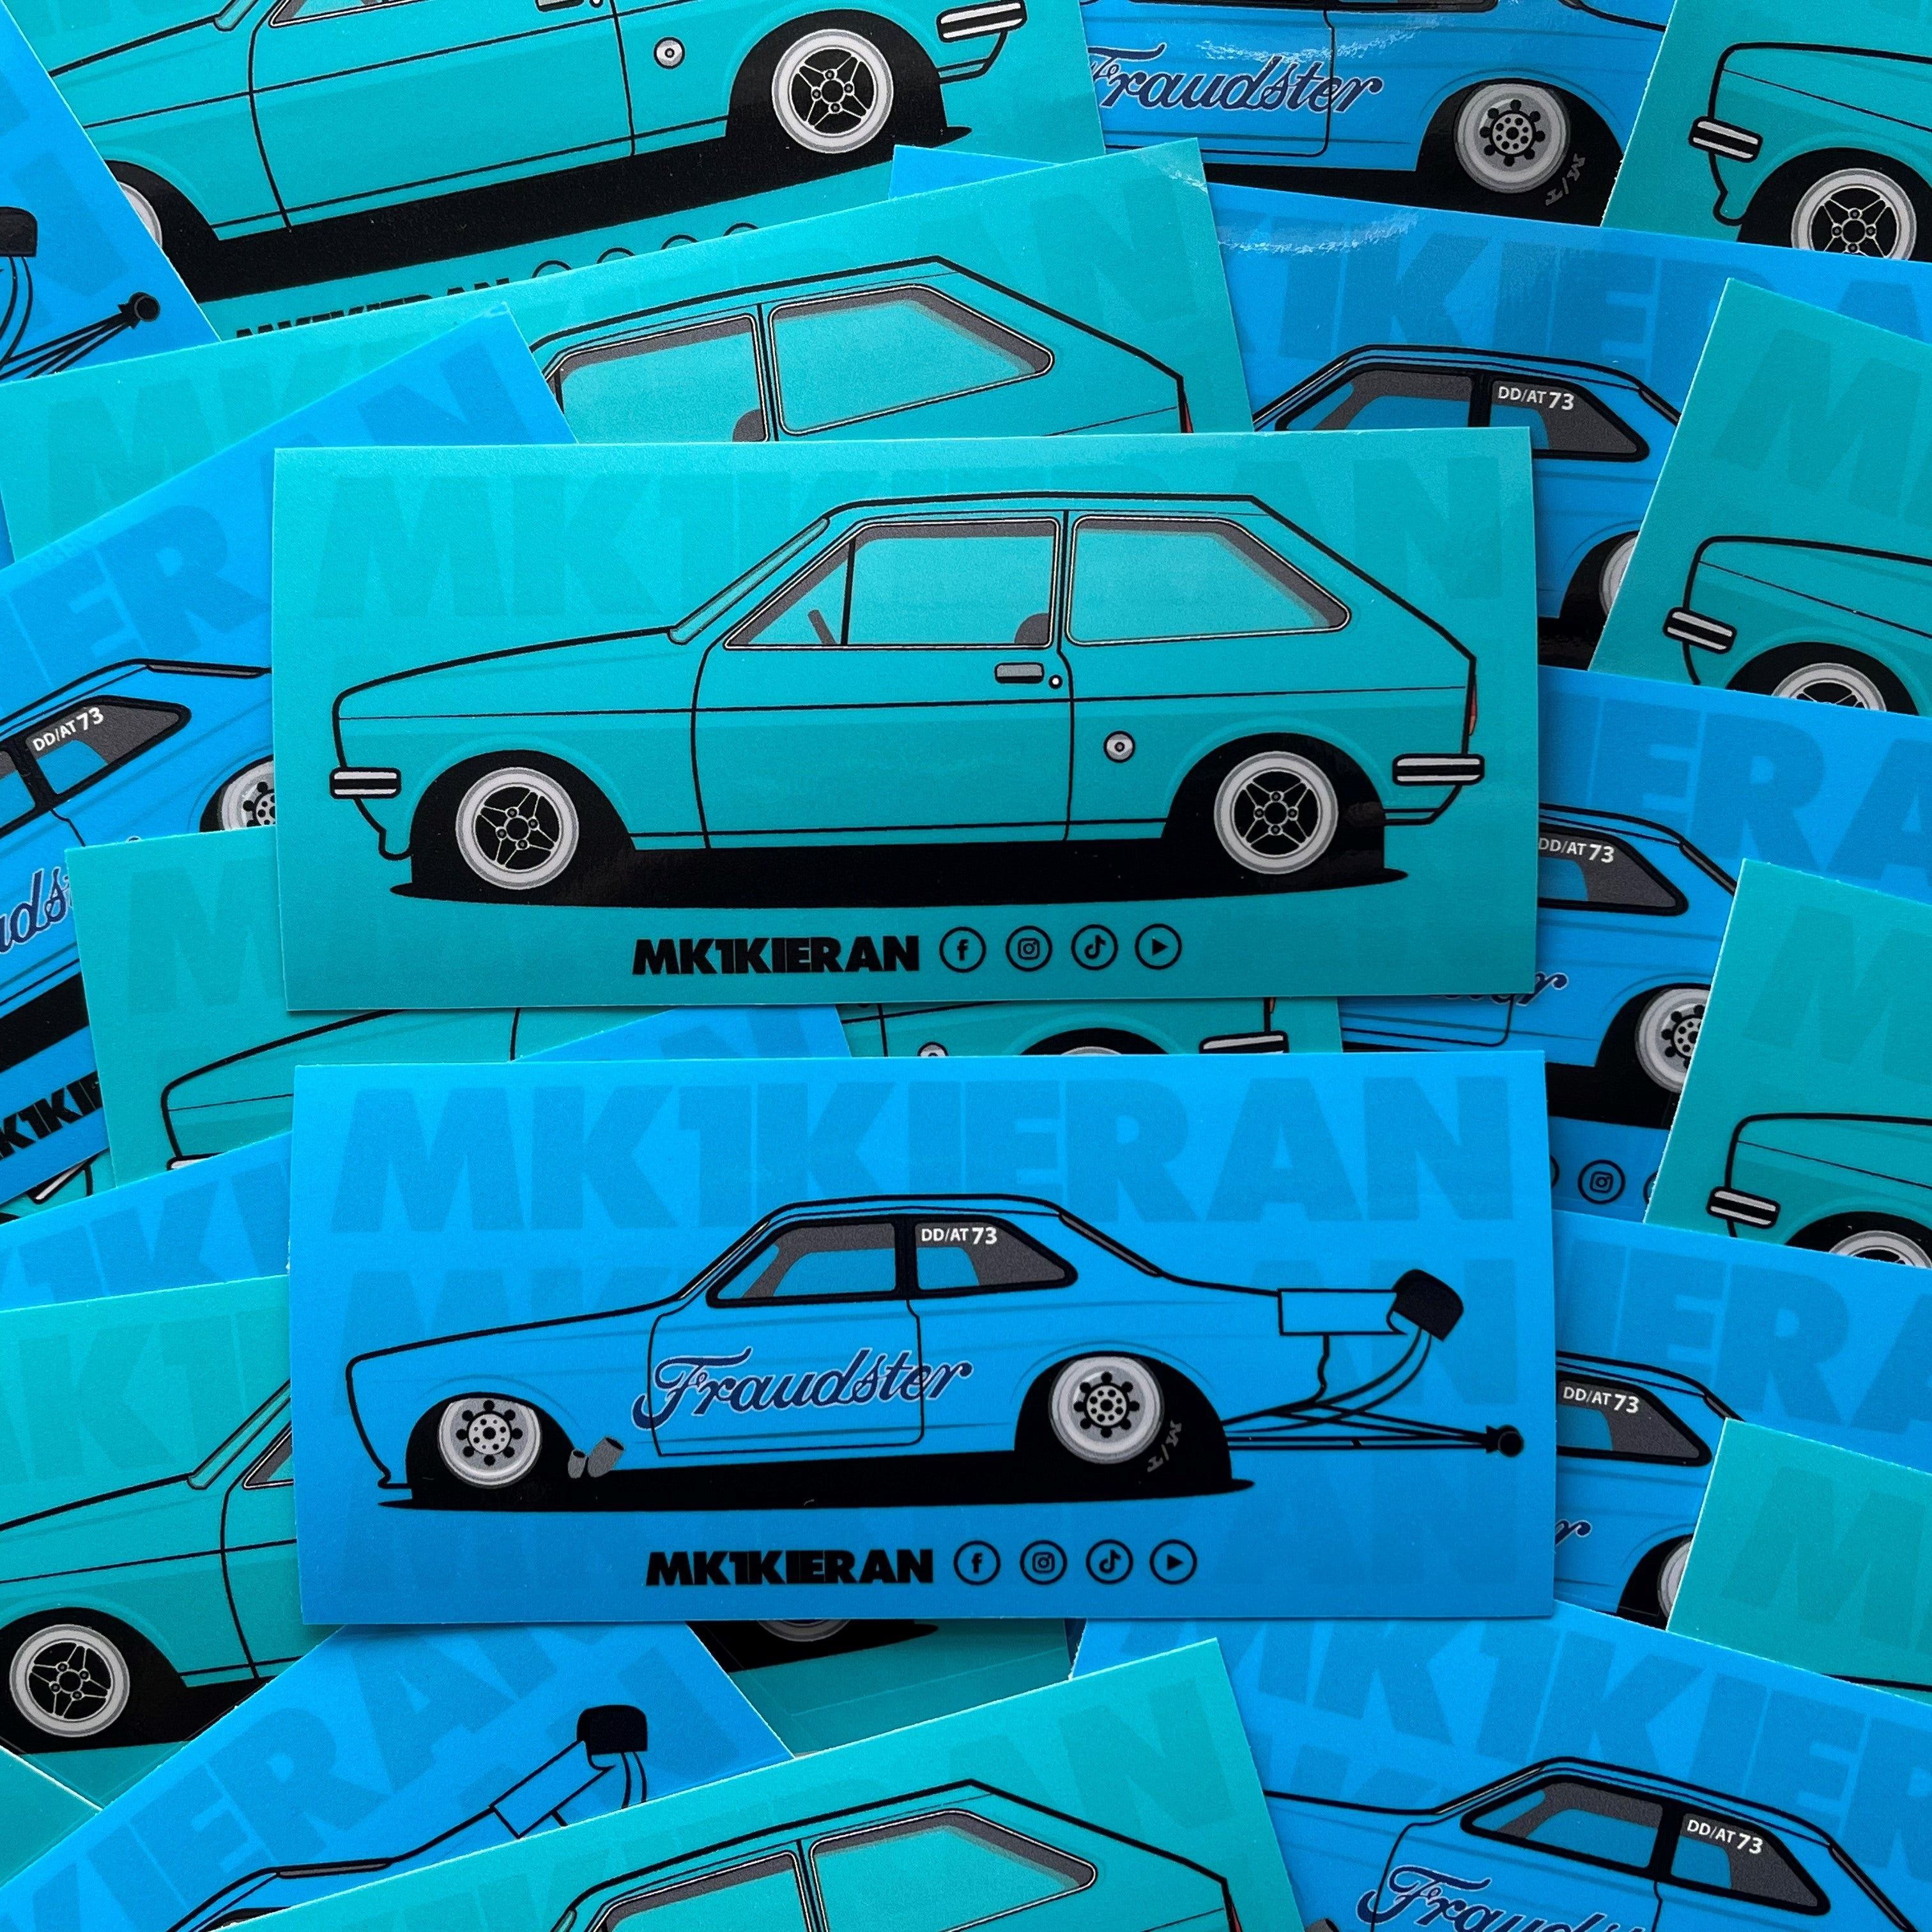 Mk1Kieran Fraudster & Fiesta stickers have landed!